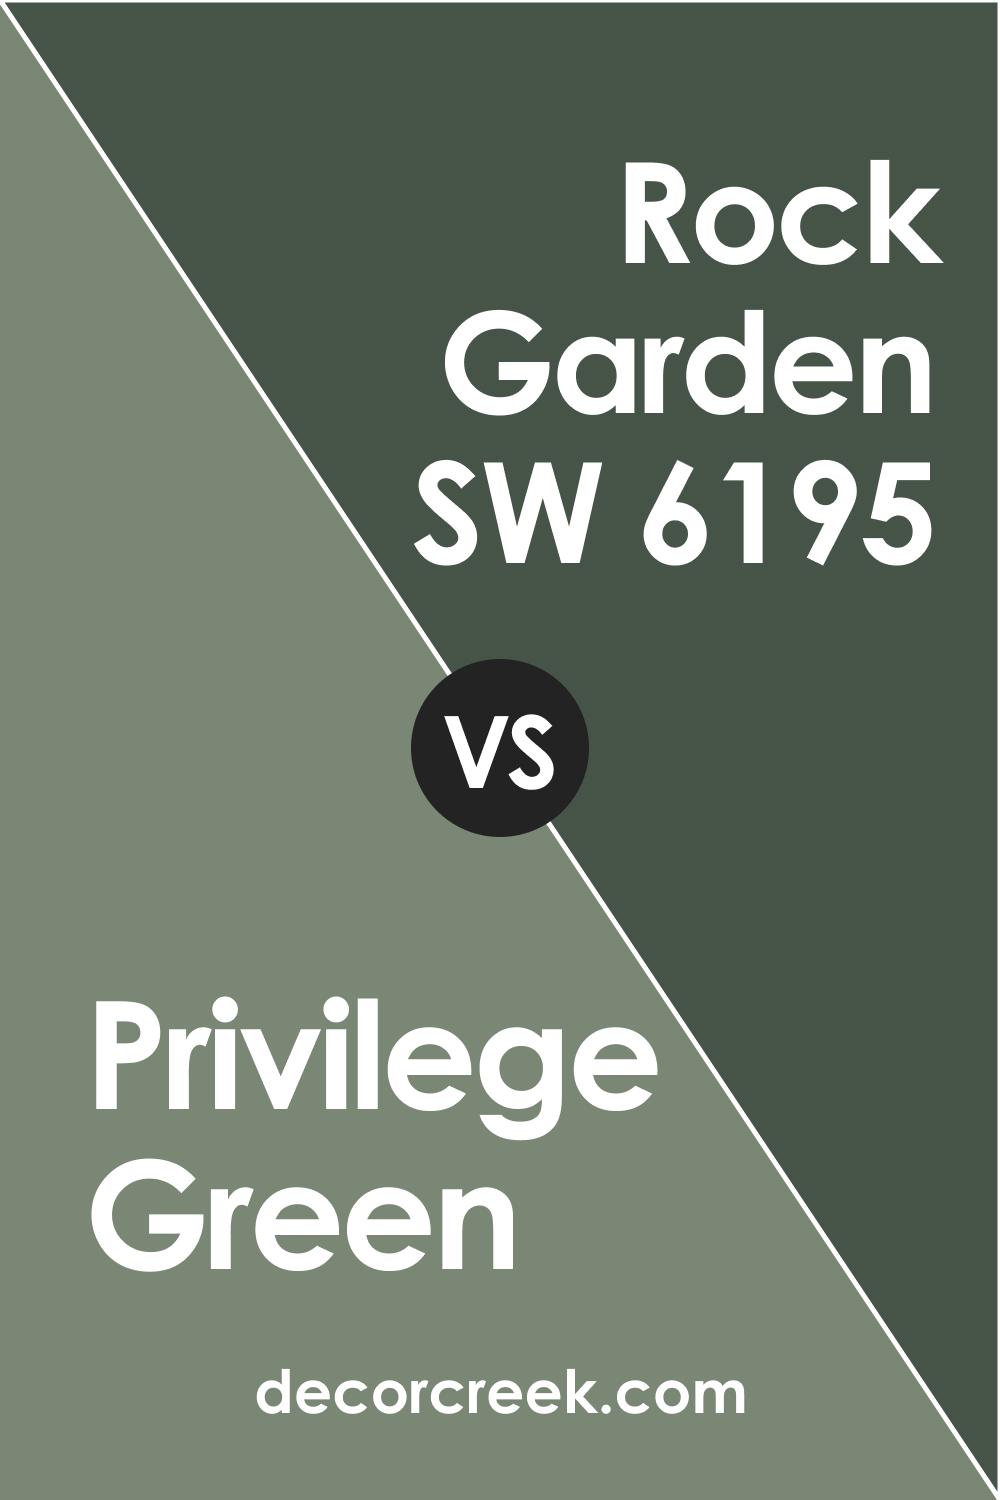 Privilege Green vs Rock Garden